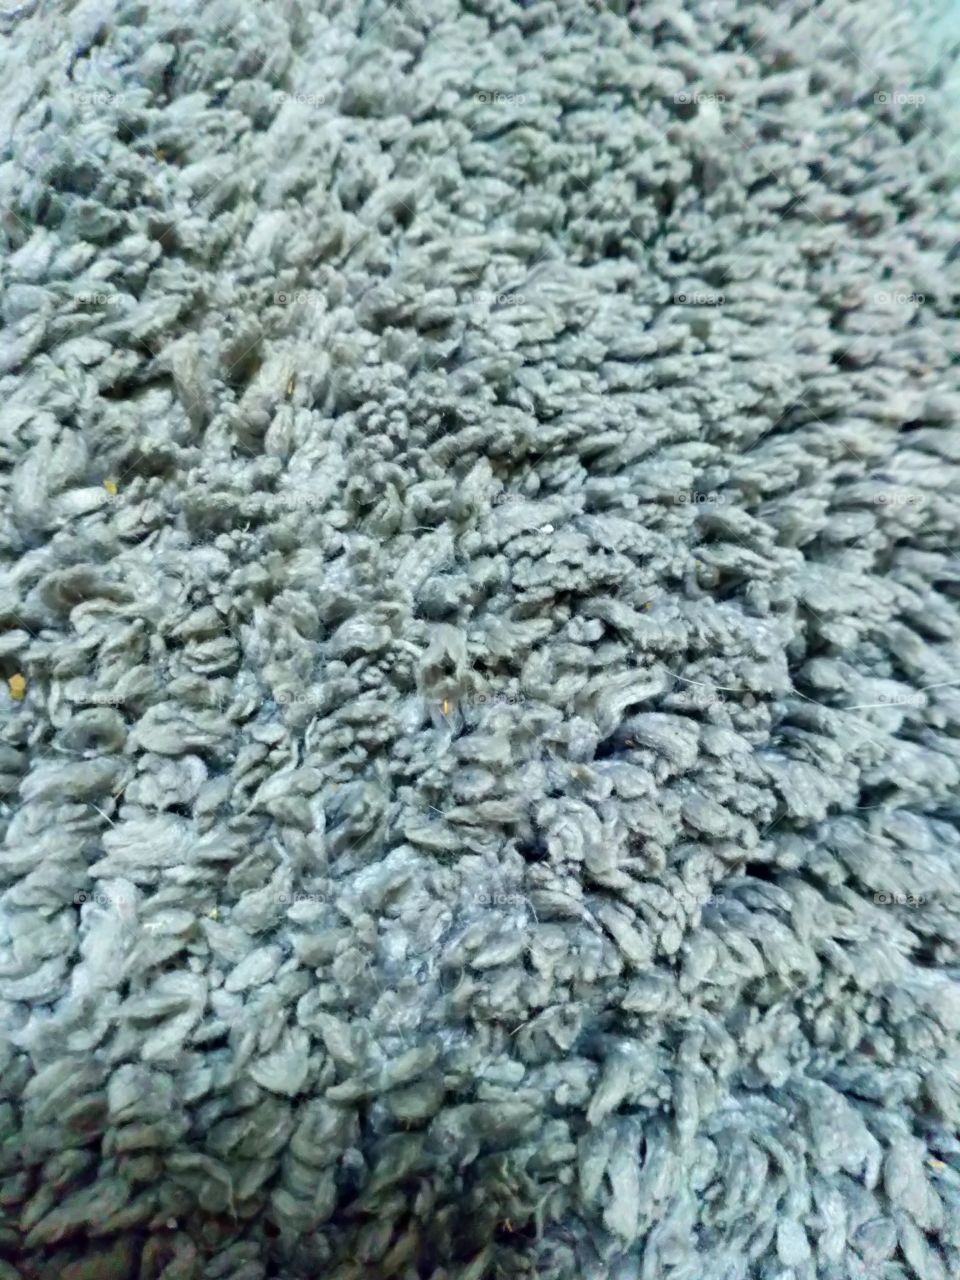 Gray carpet